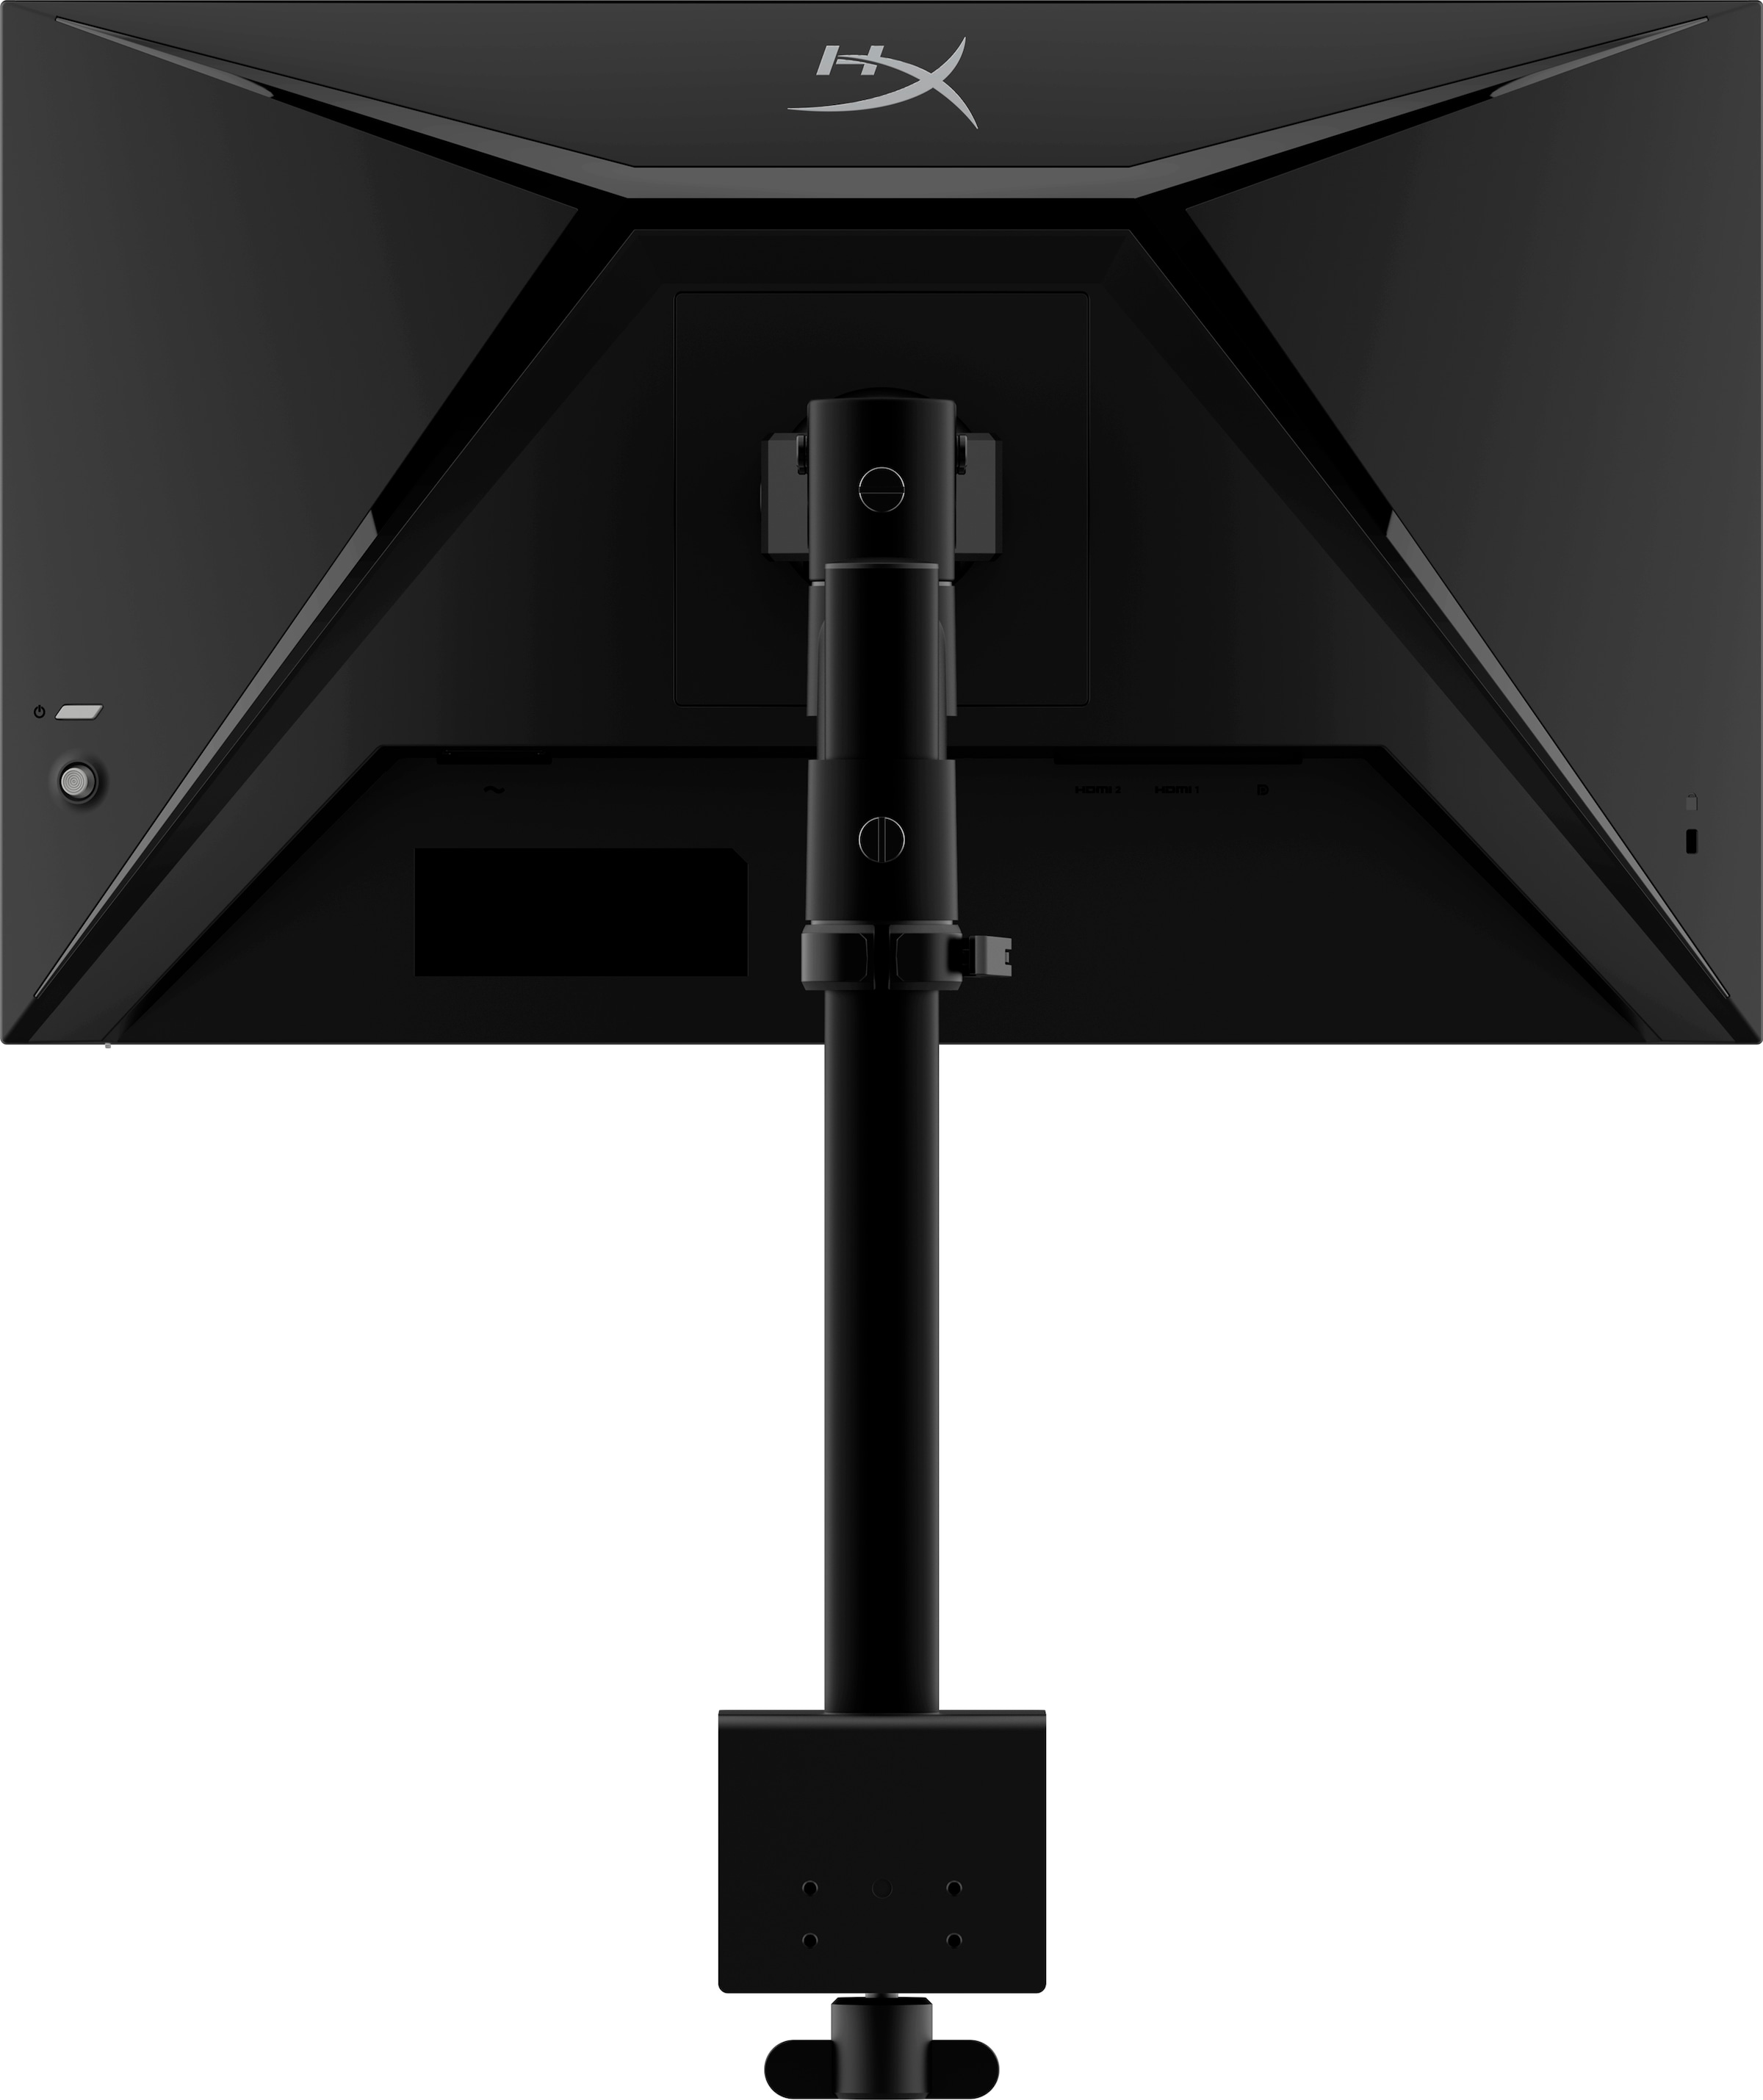 HyperX Gaming-Monitor »Armada 25«, 62,23 cm/24,5 Zoll, 1920 x 1080 px, Full HD, 1 ms Reaktionszeit, 240 Hz